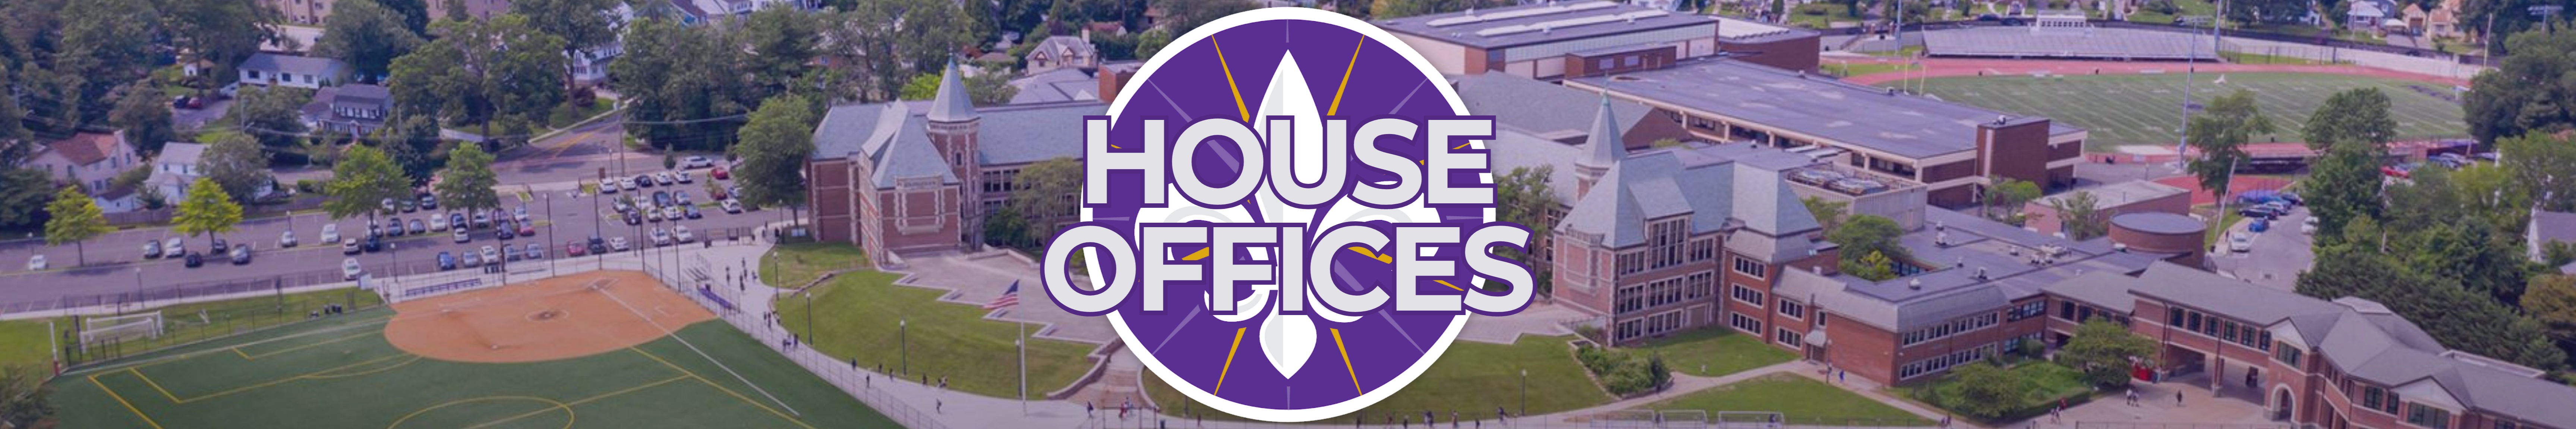 house office banner